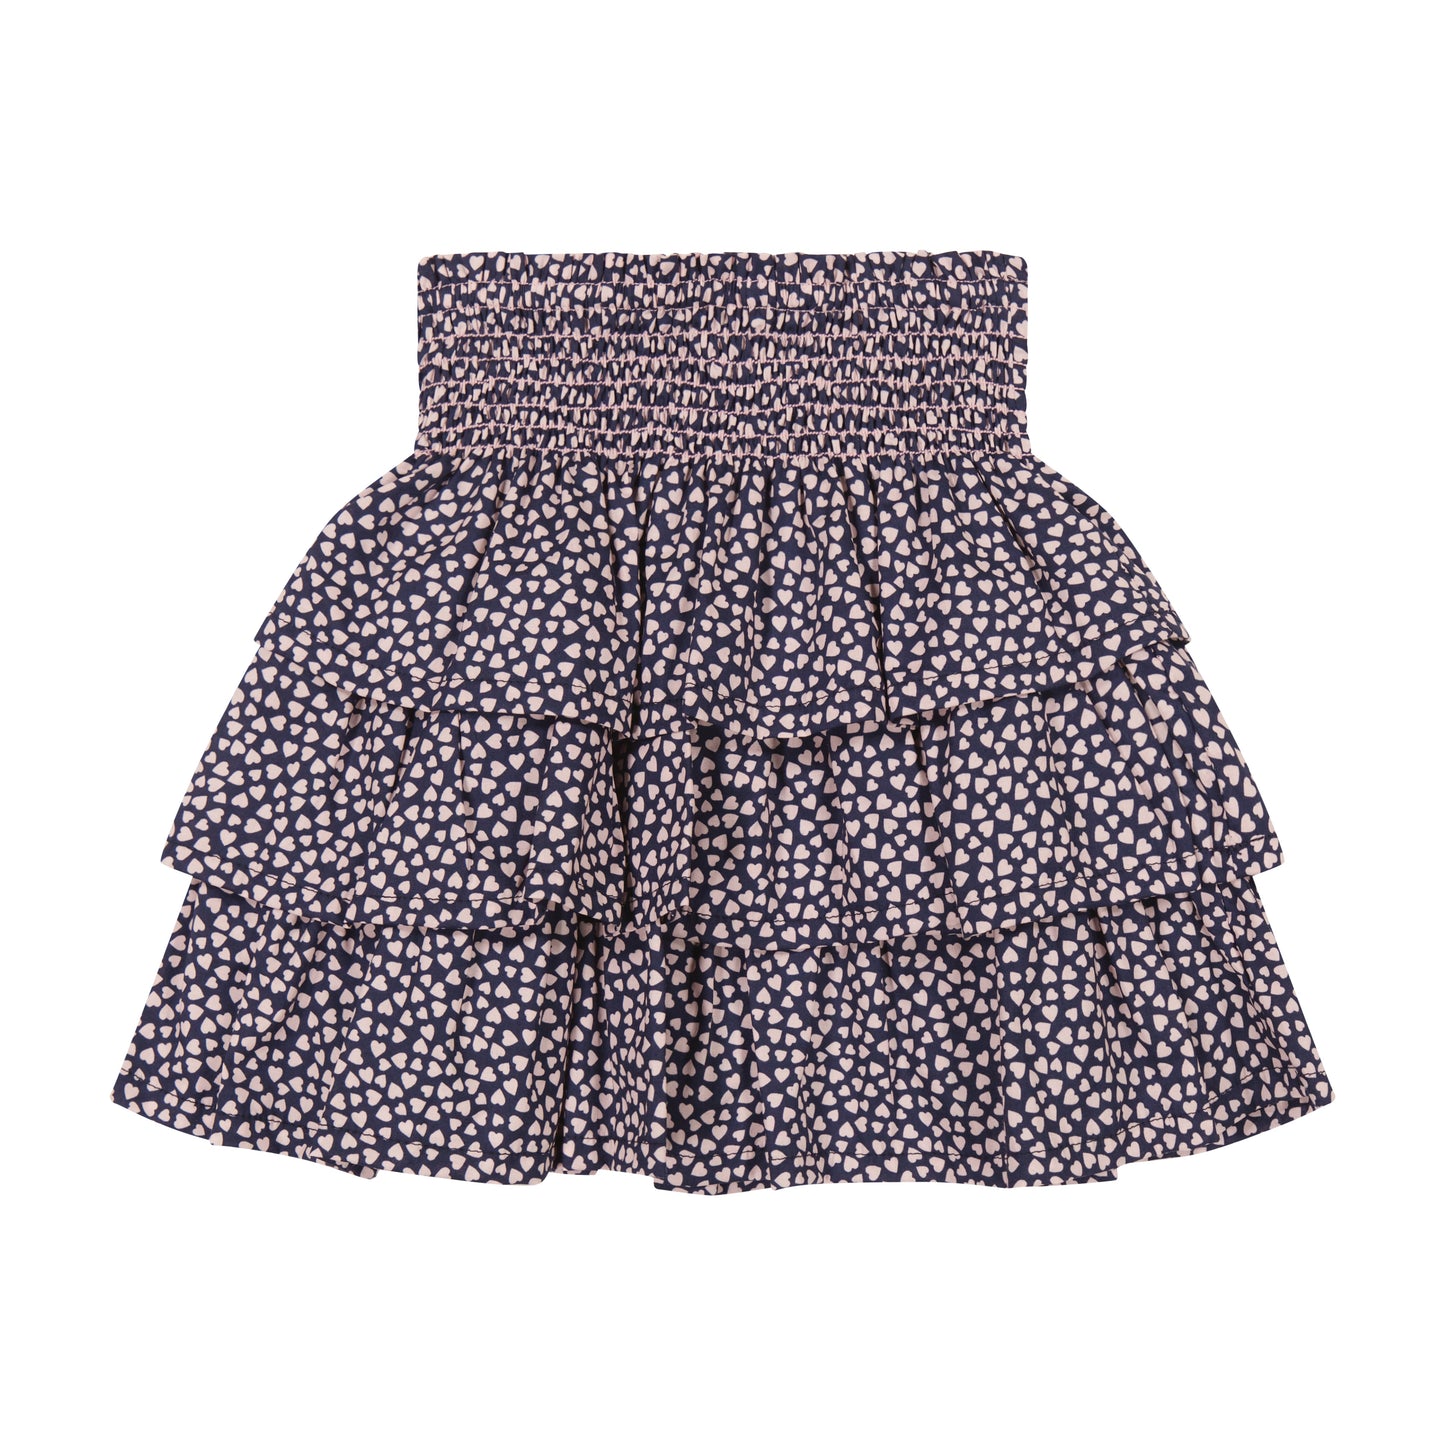 Maisy Ruffle Skirt Mini Pink Hearts